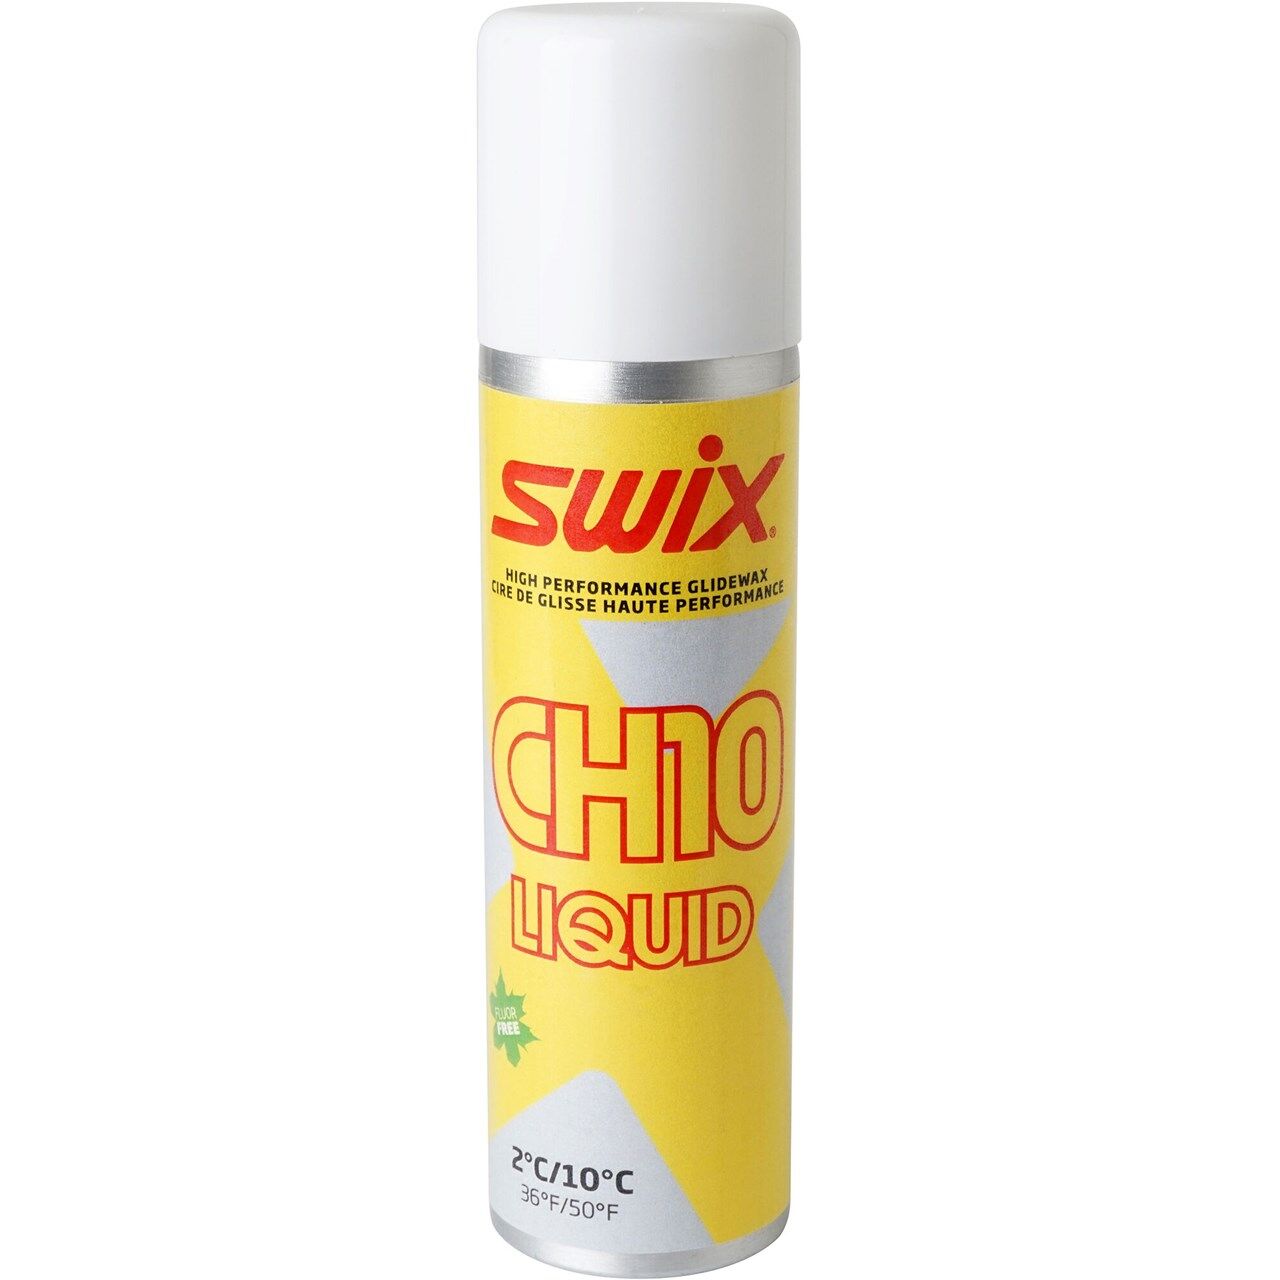 Swix CH10X Liquid 2C/10C (125ml)